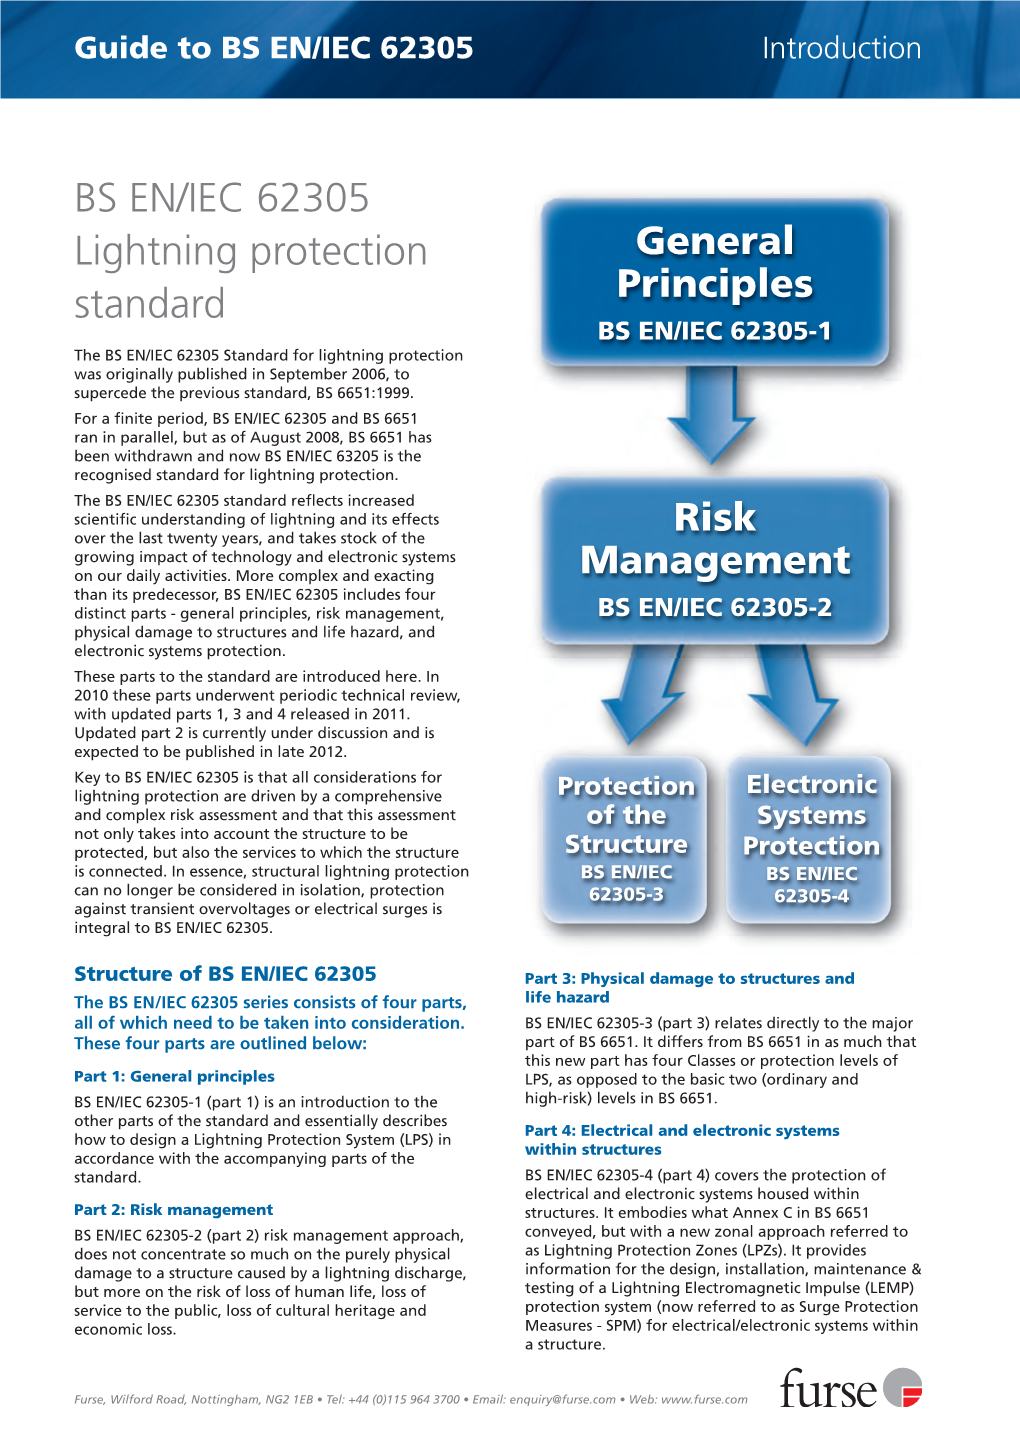 BS EN/IEC 62305 Lightning Protection Standard